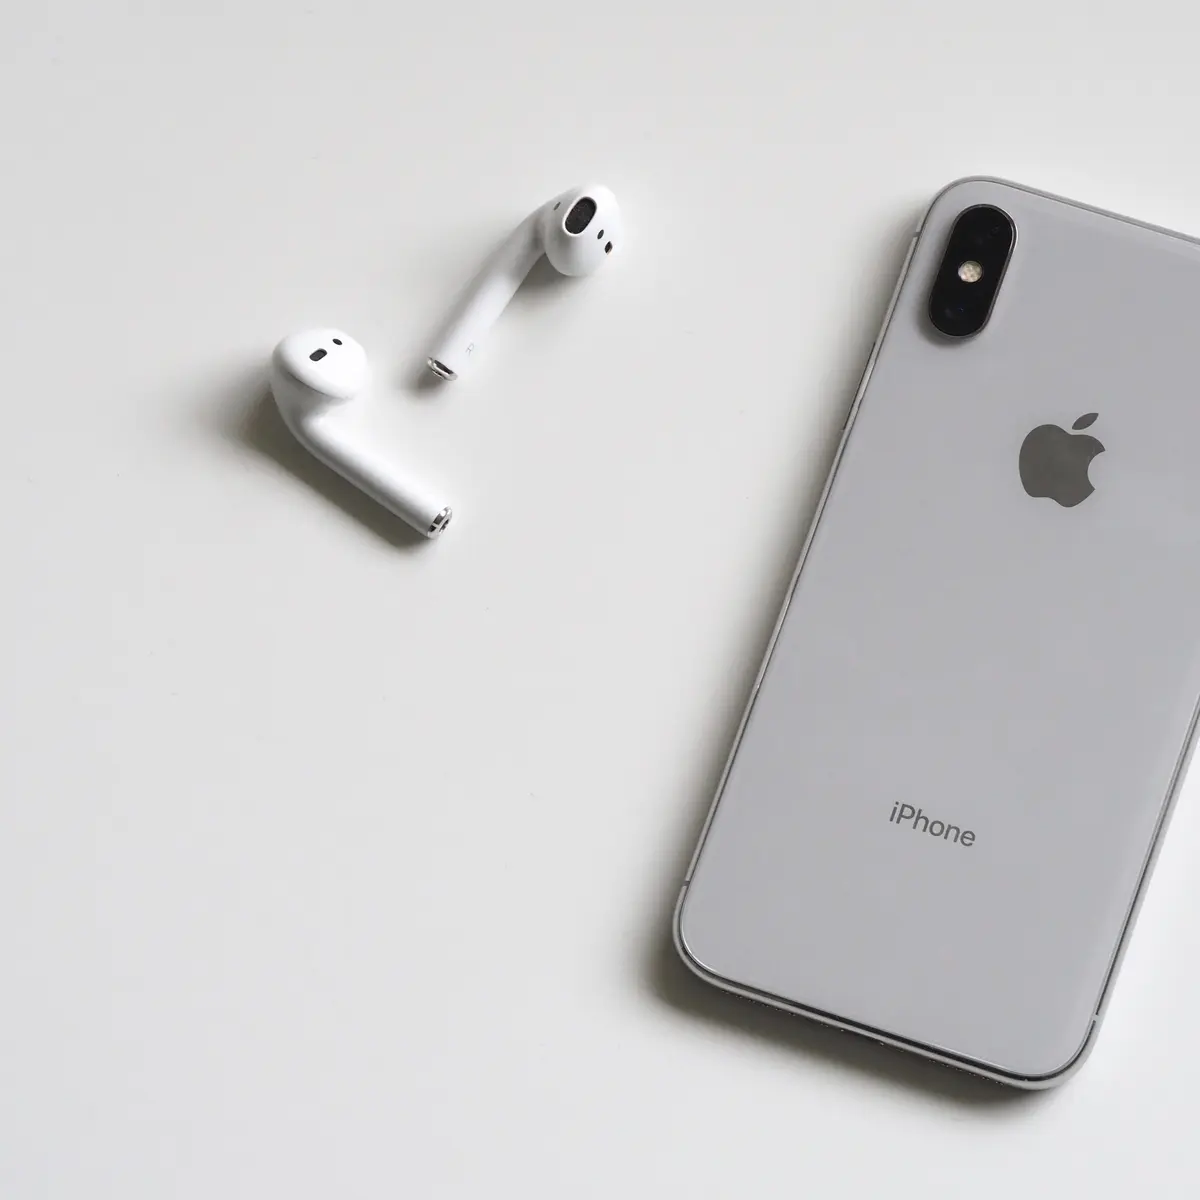 Harga iPhone X Baru dan Bekas Terbaru 2020, Cek Spesifikasi Lengkapnya -  Hot